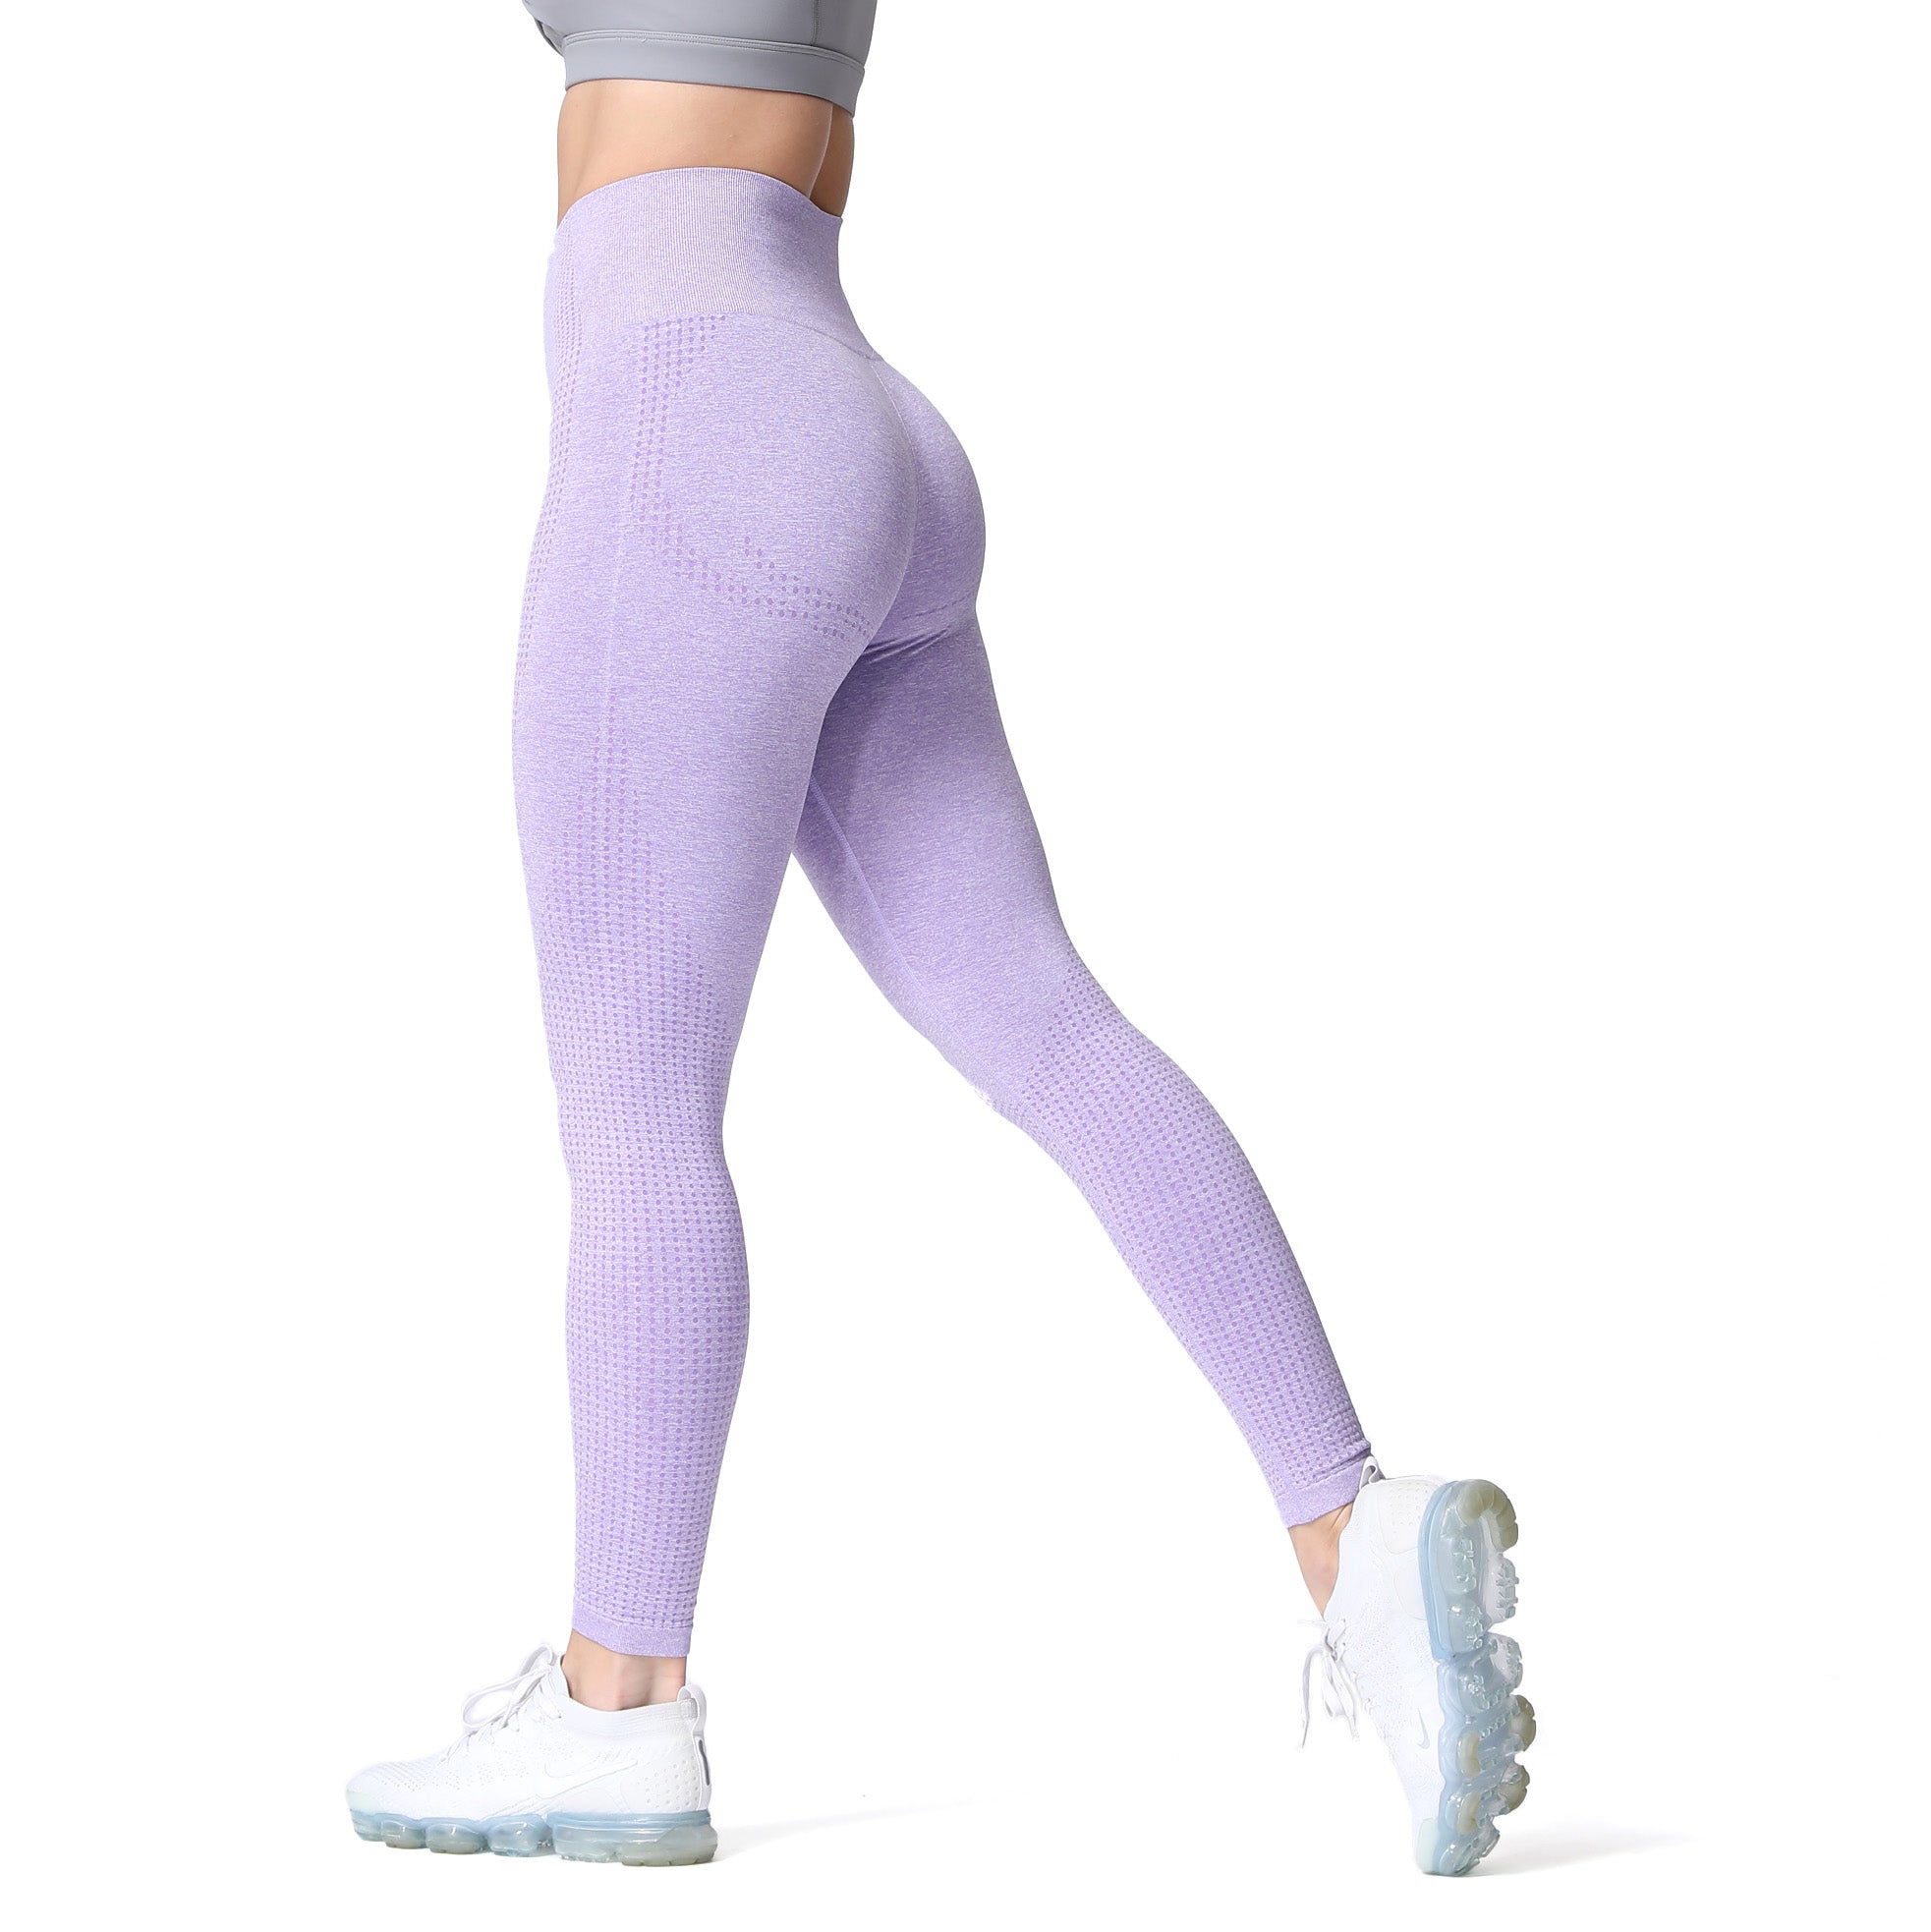 Aoxjox Women's High Waist Workout Gym Vital Seamless Leggings Yoga